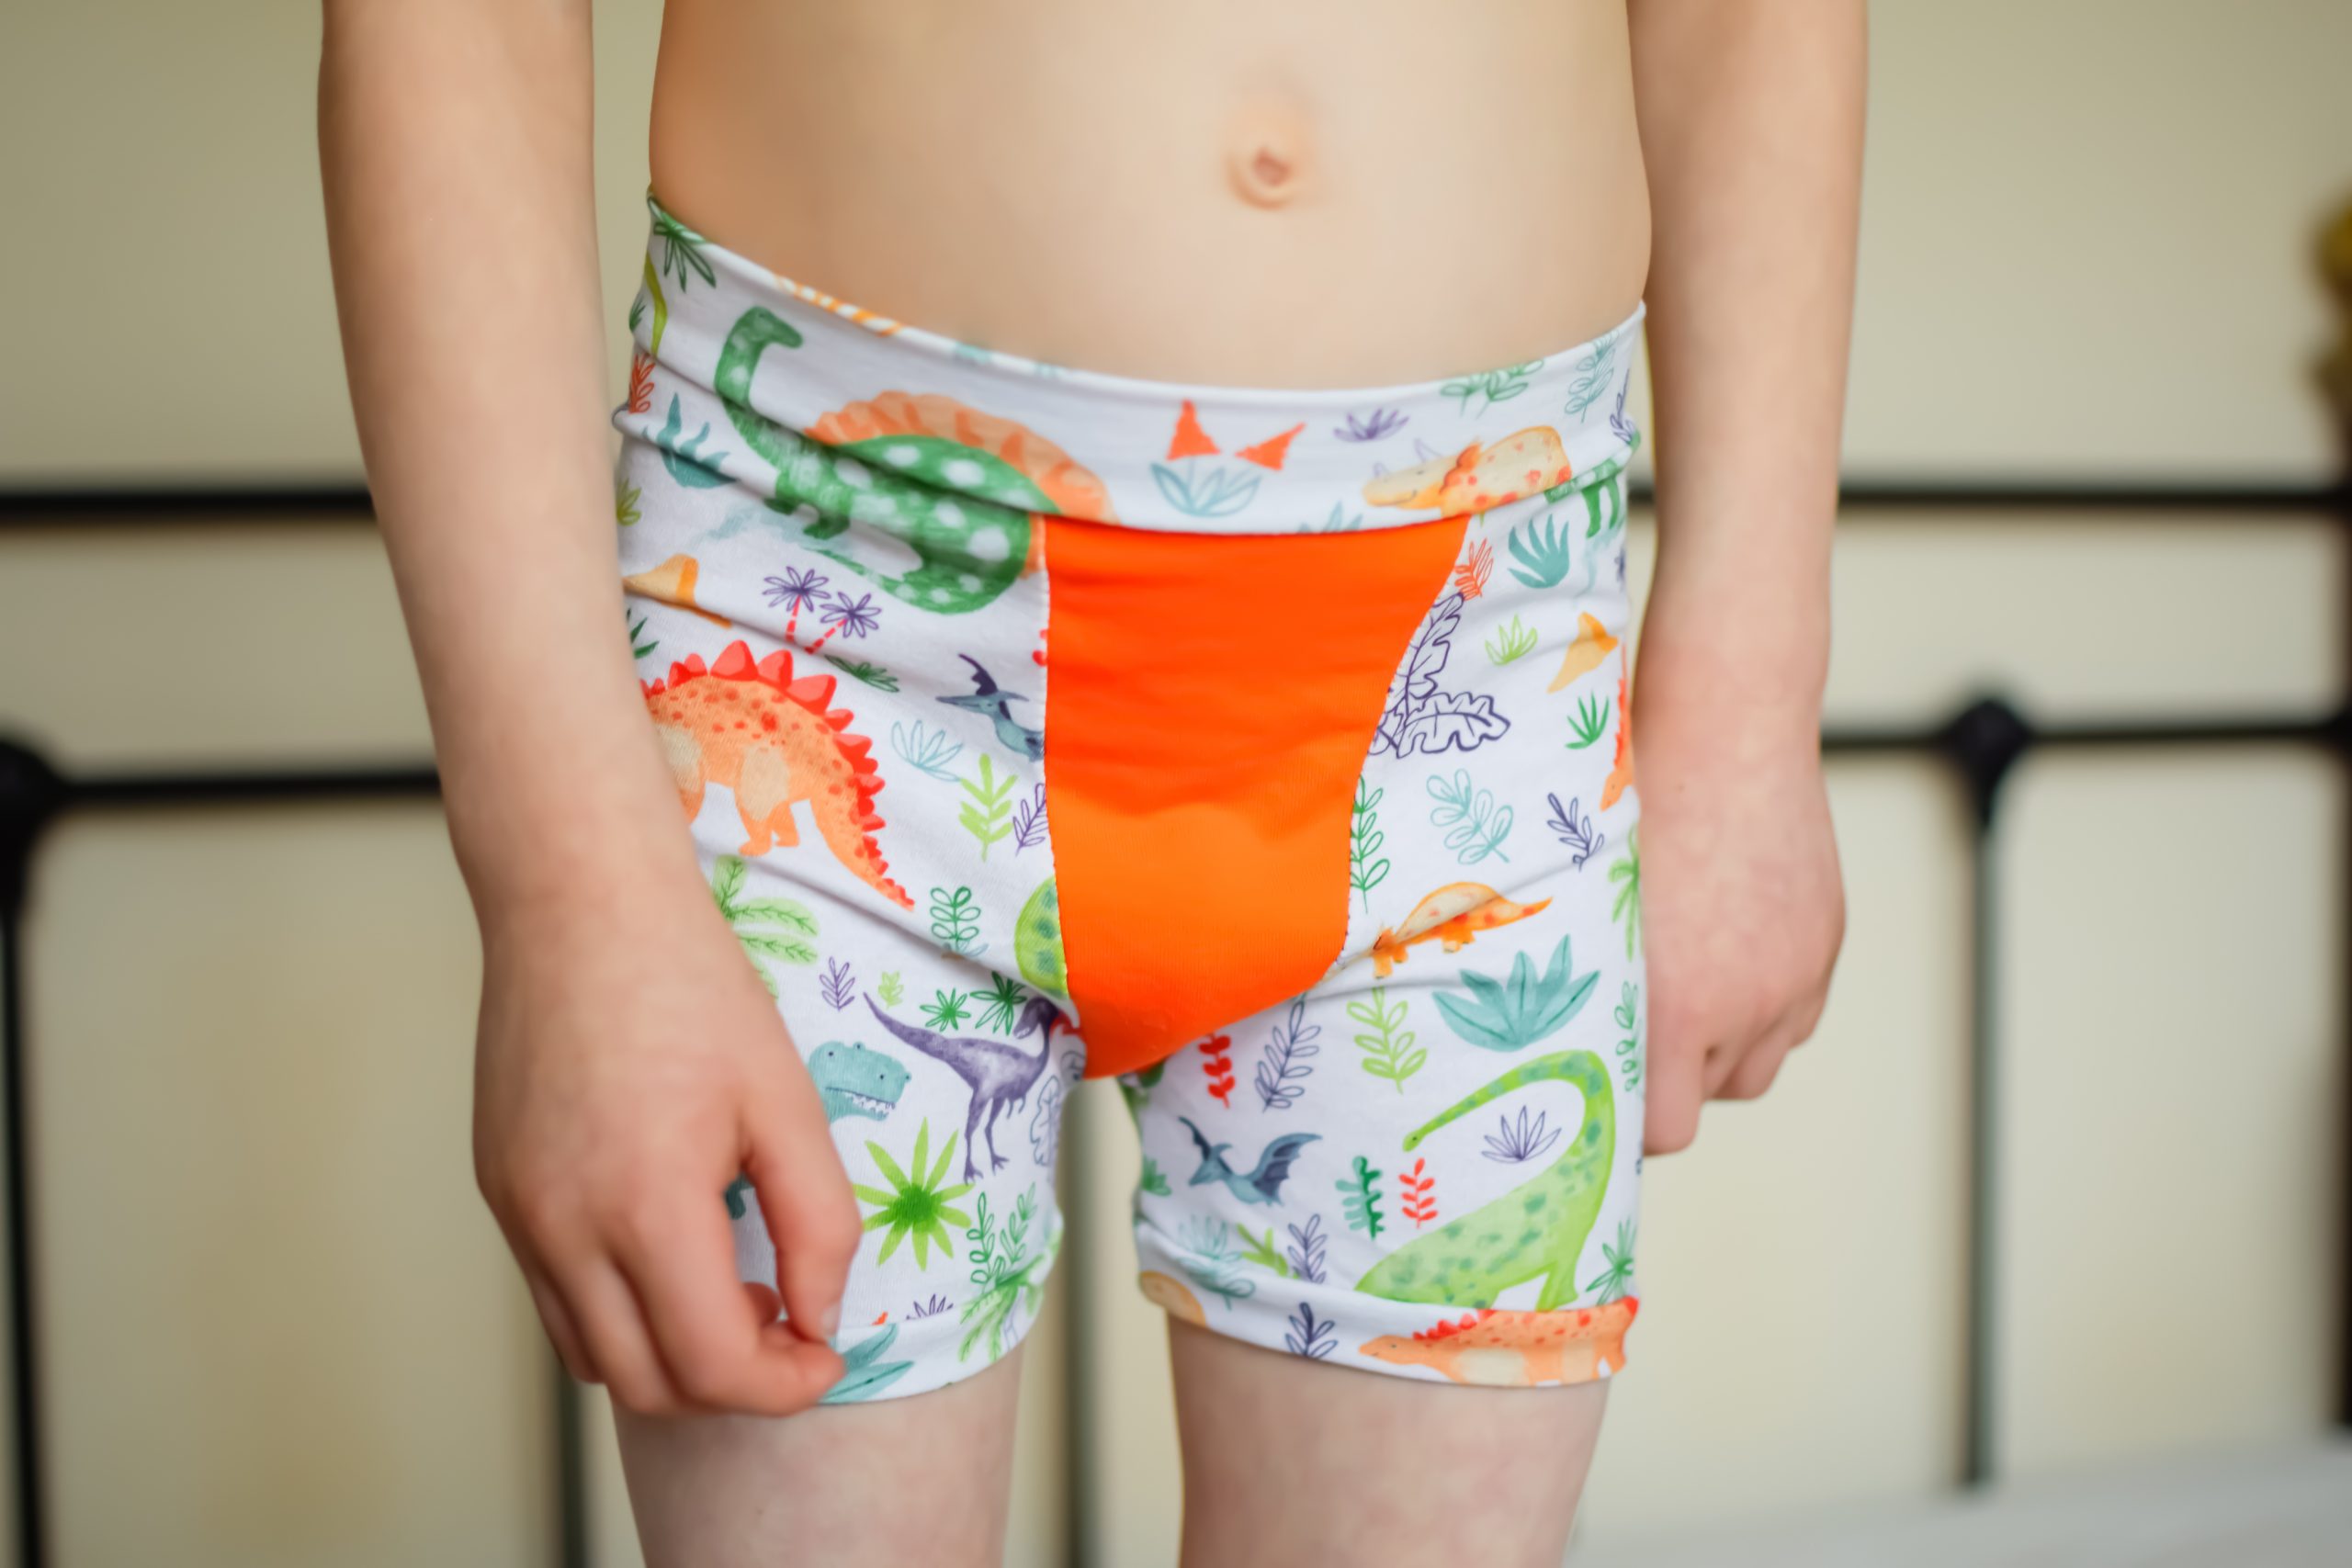 4 Pieces/lots of Kids Underwear High Quality Cotton Boy Briefs Cute Spider  Pattern Kids Boxer Briefs Toddler Soft Girl Pants